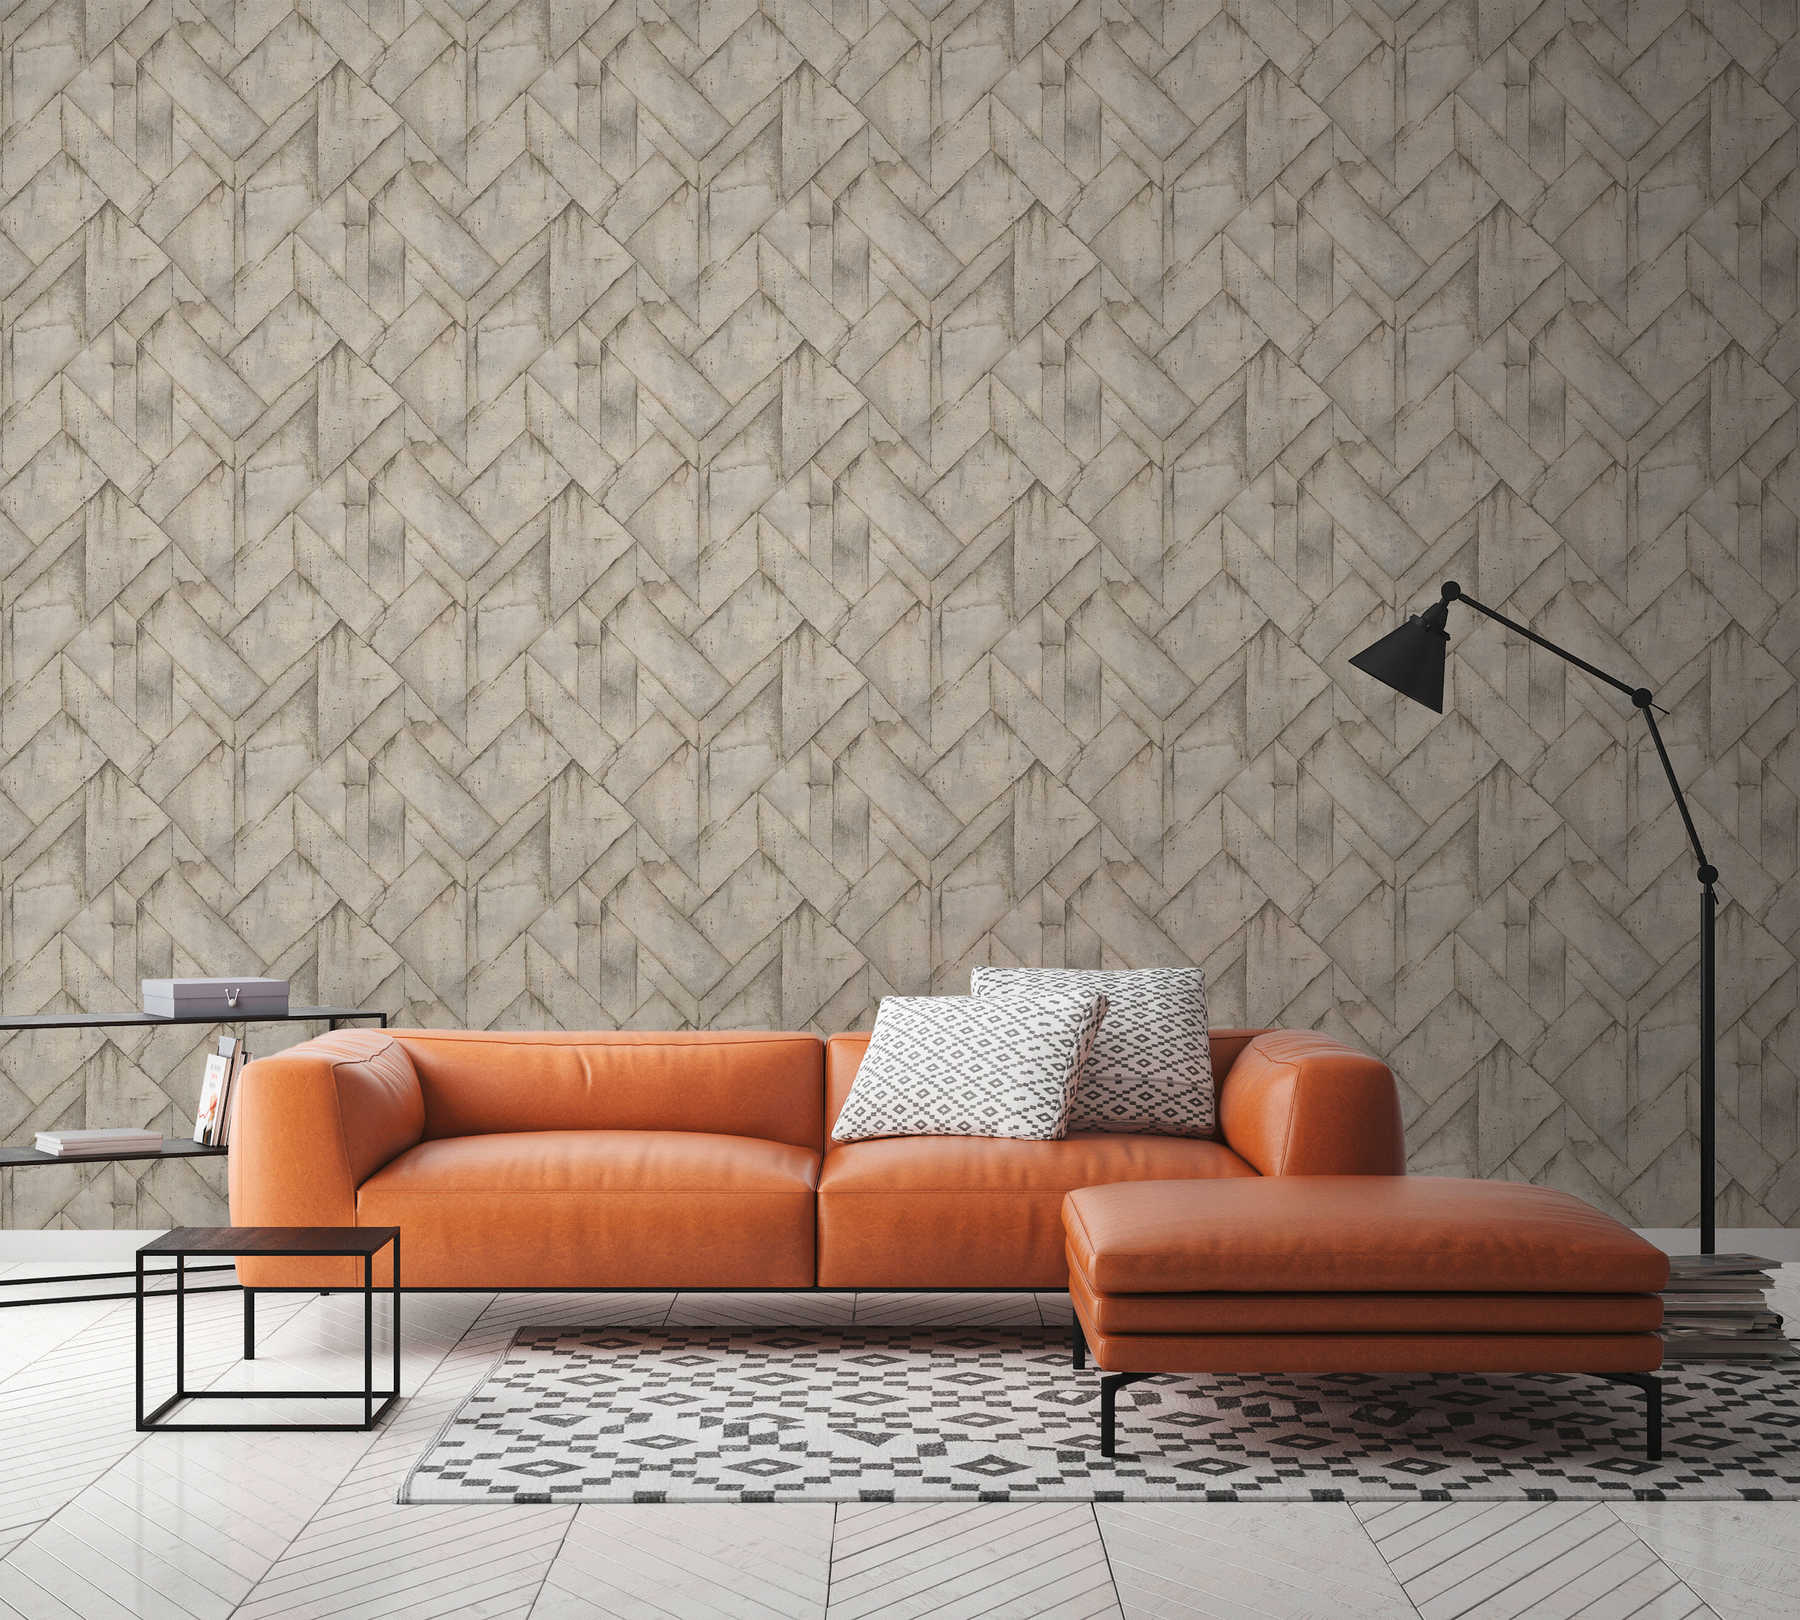             Concrete look wallpaper rustic & geometric design - beige, brown, grey
        